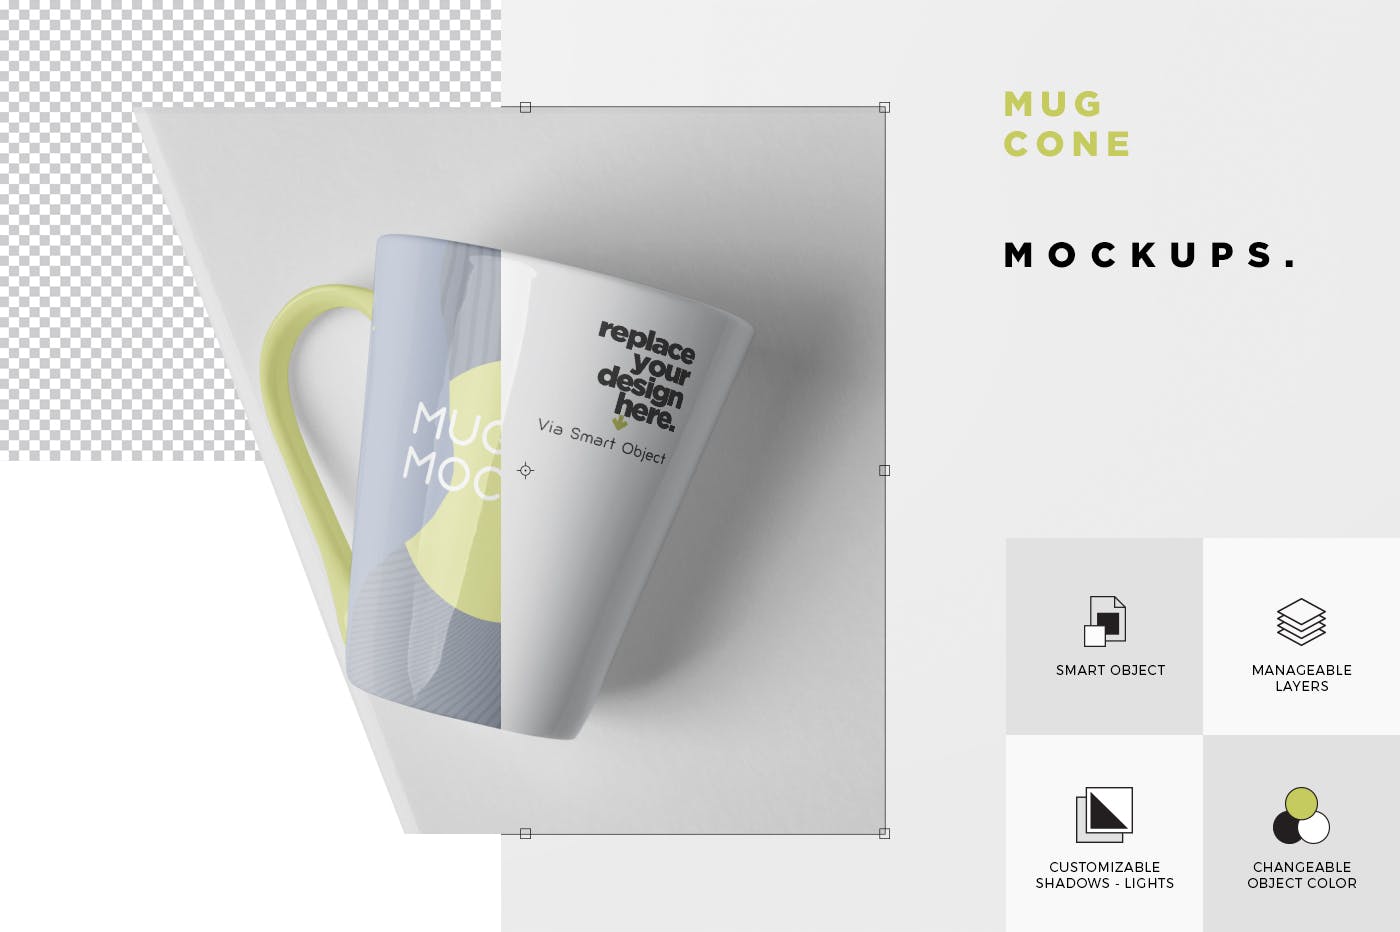 锥形马克杯图案设计16图库精选 Mug Mockup – Cone Shaped插图(5)